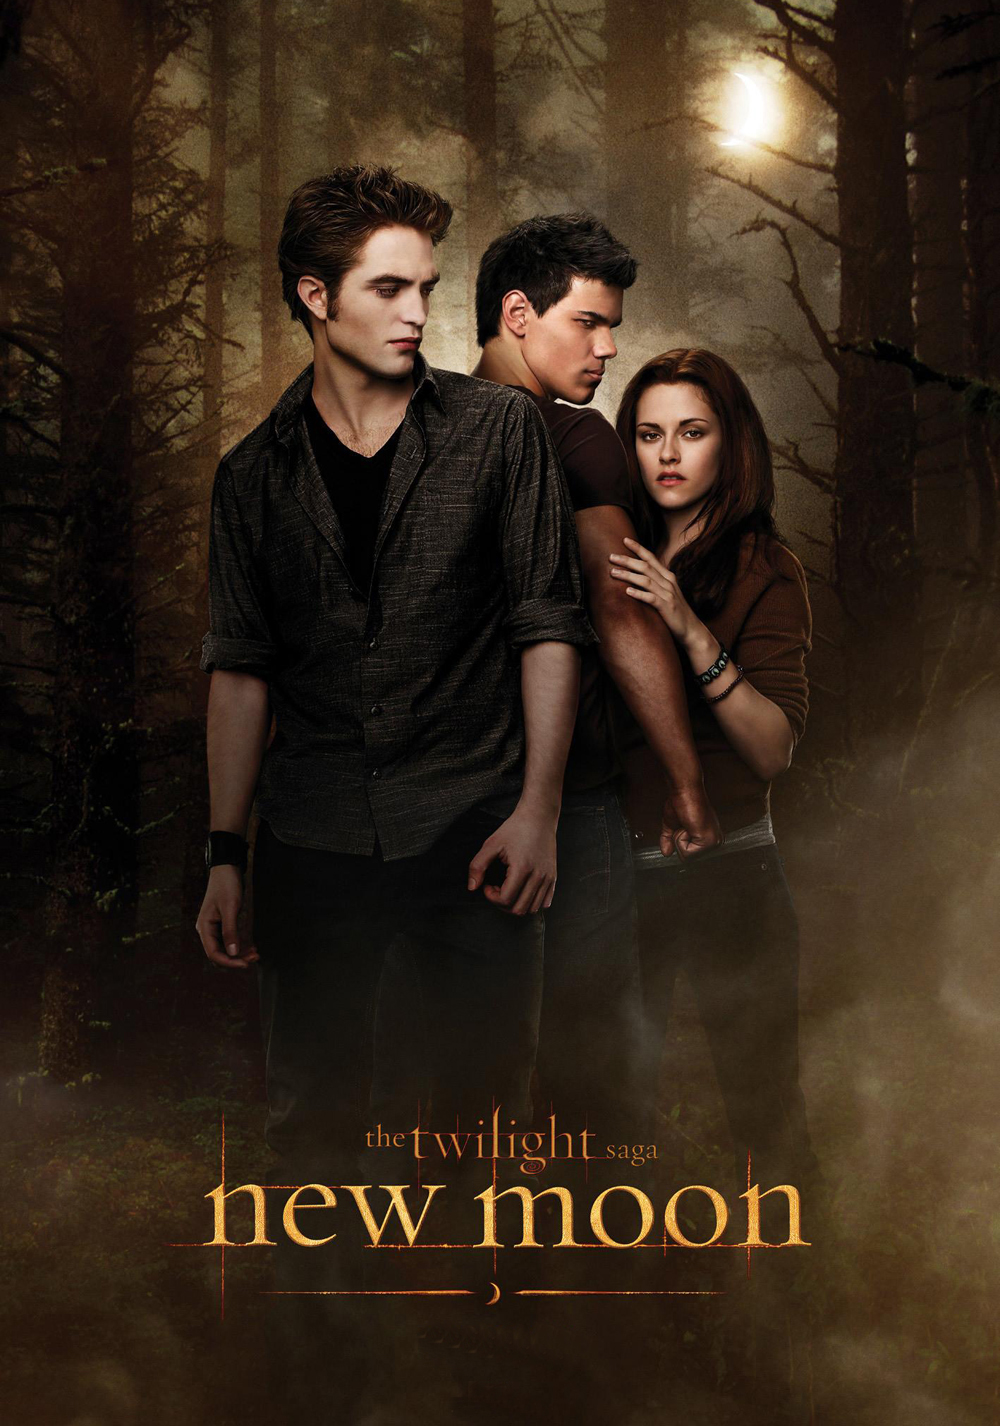 The Twilight Saga: New Moon Picture